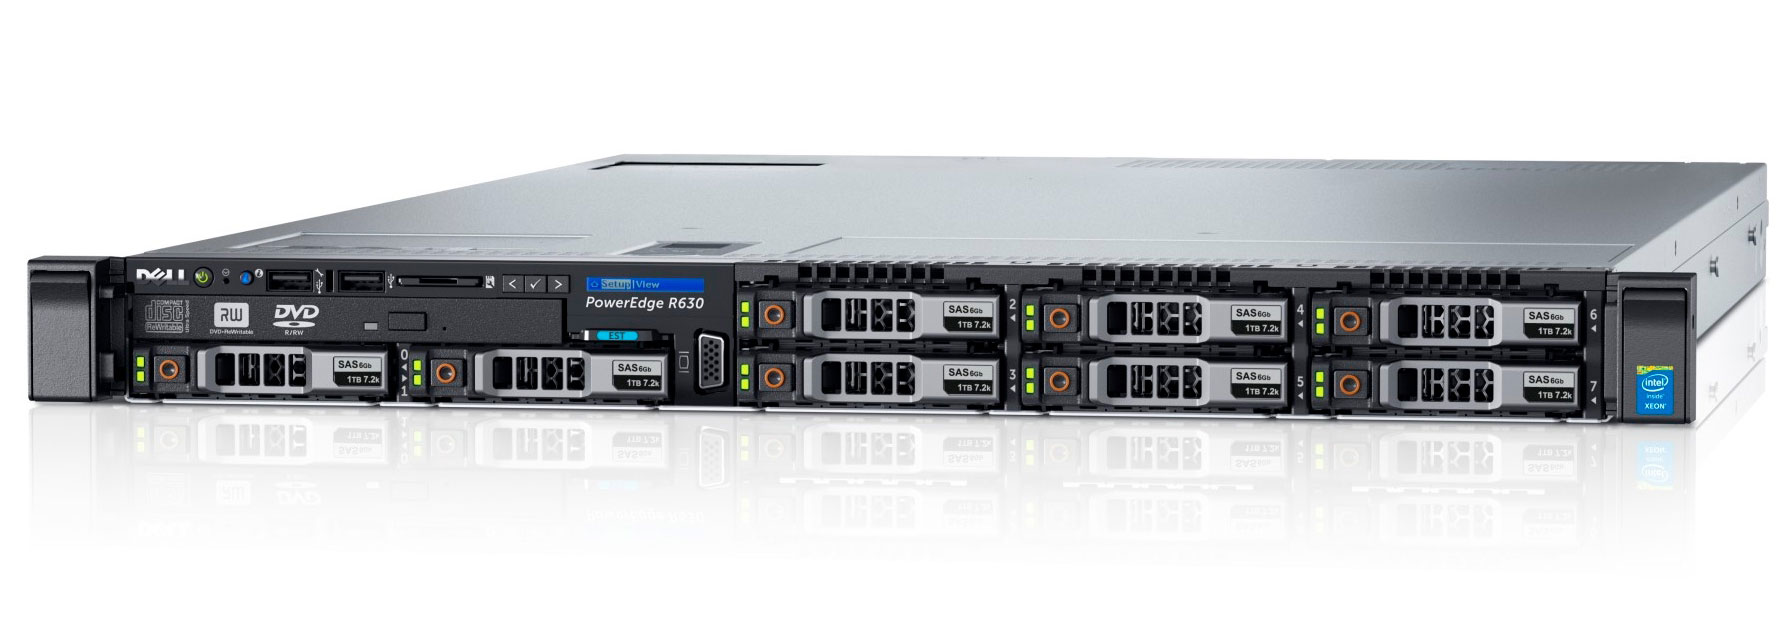 Подробное фото Сервер DELL PowerEdge R630 Xeon 2x E5-2660v3 128Gb 2133P DDR4 8x noHDD 2.5", SAS RAID Perc H730 mini, 1024Mb, DVD, 2*PSU